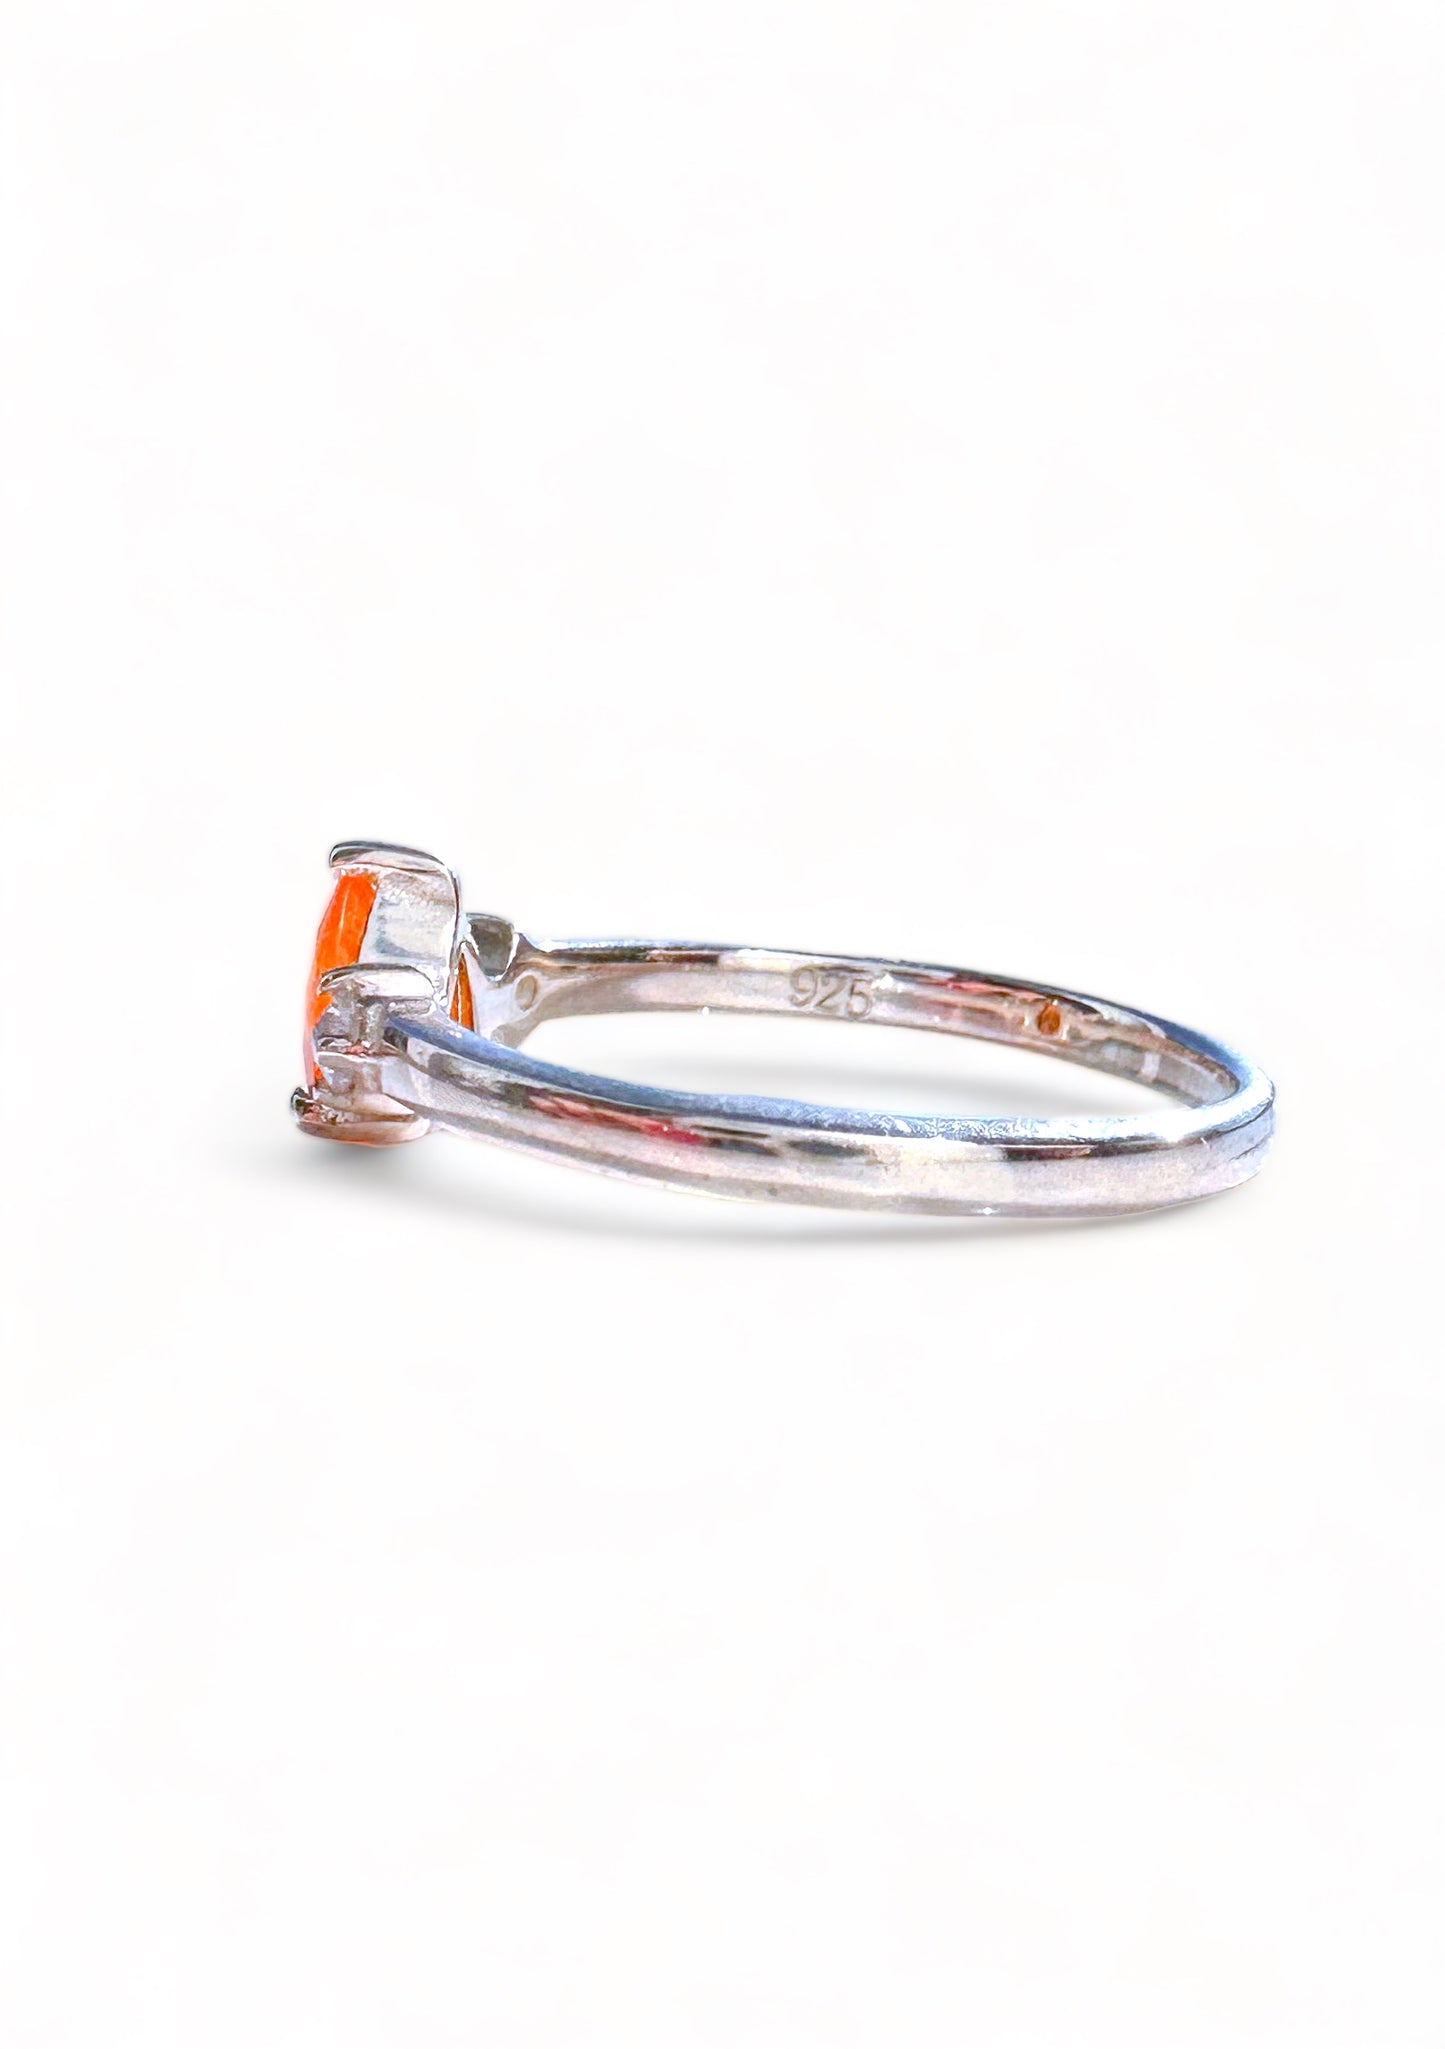 Dark Orange Mexican Fire Opal + Cubic Zirconia Sterling Silver Ring